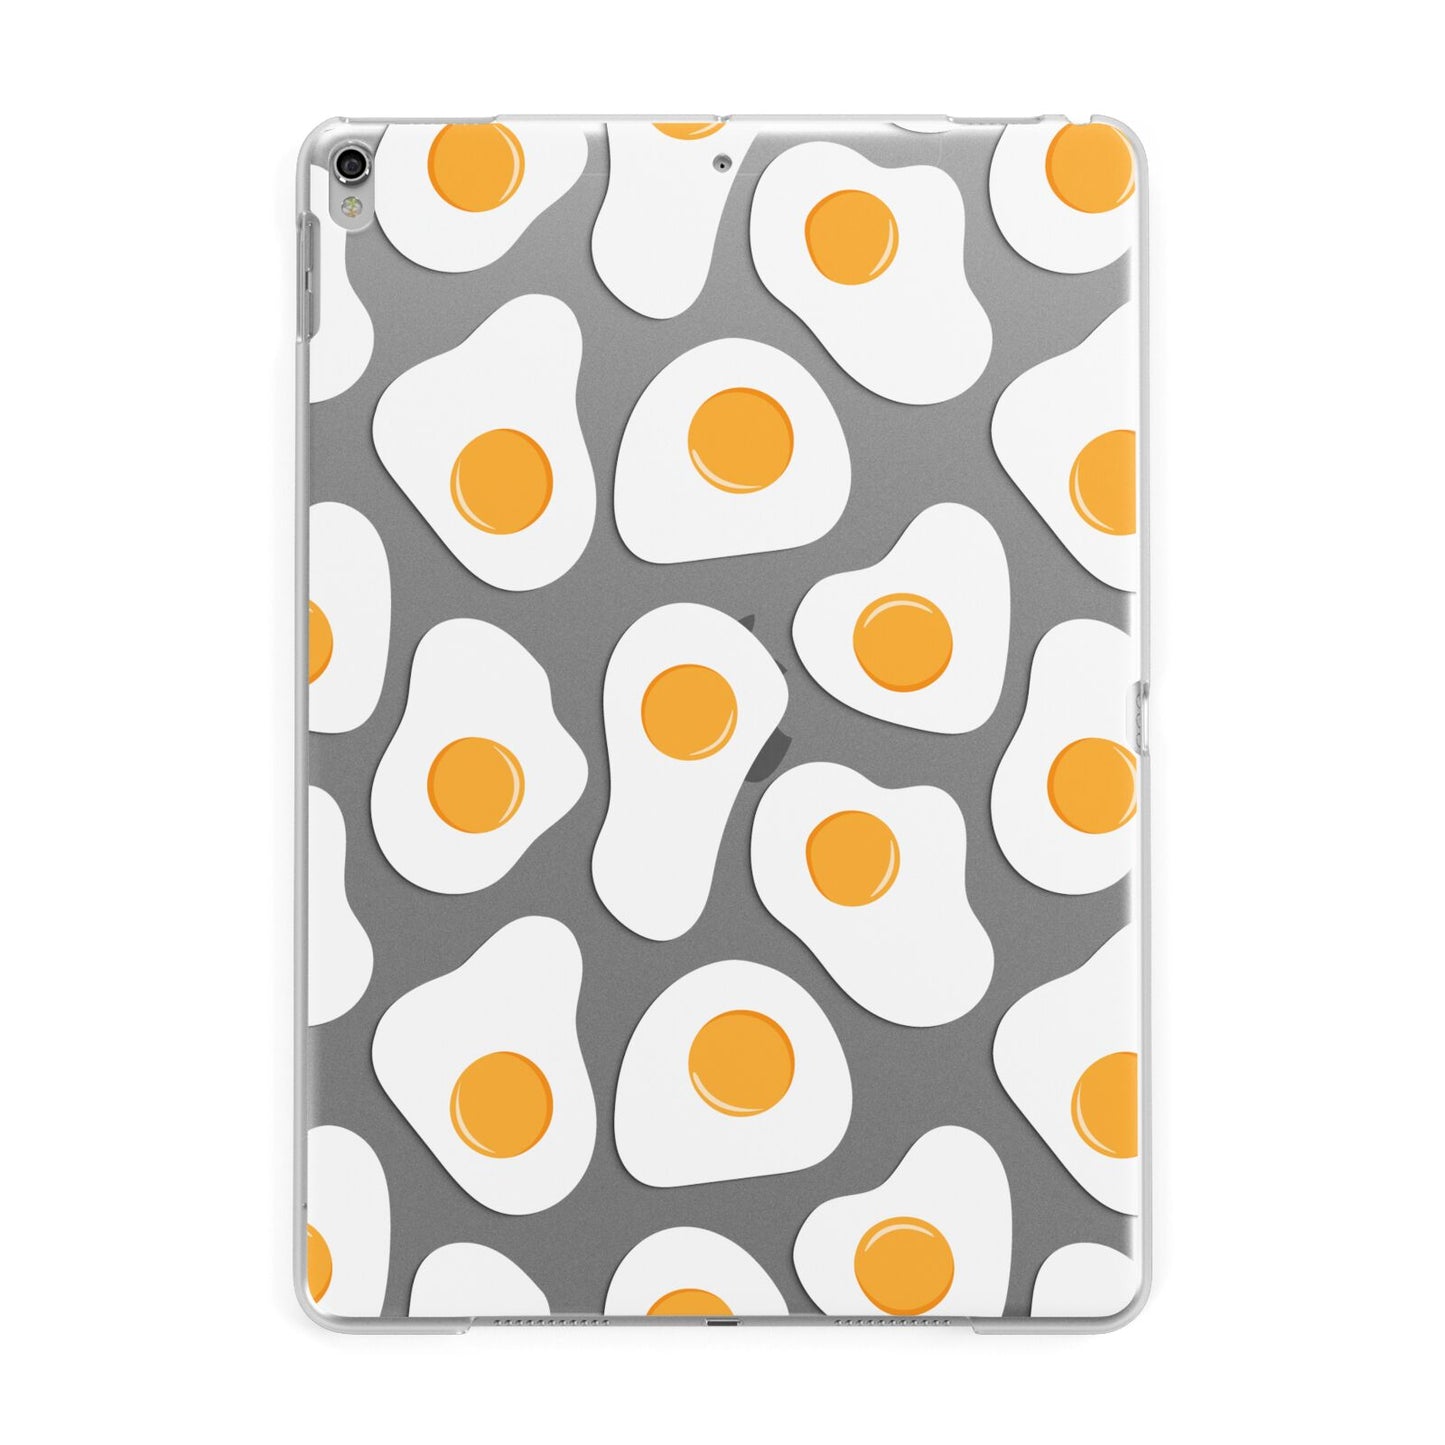 Fried Egg Apple iPad Silver Case